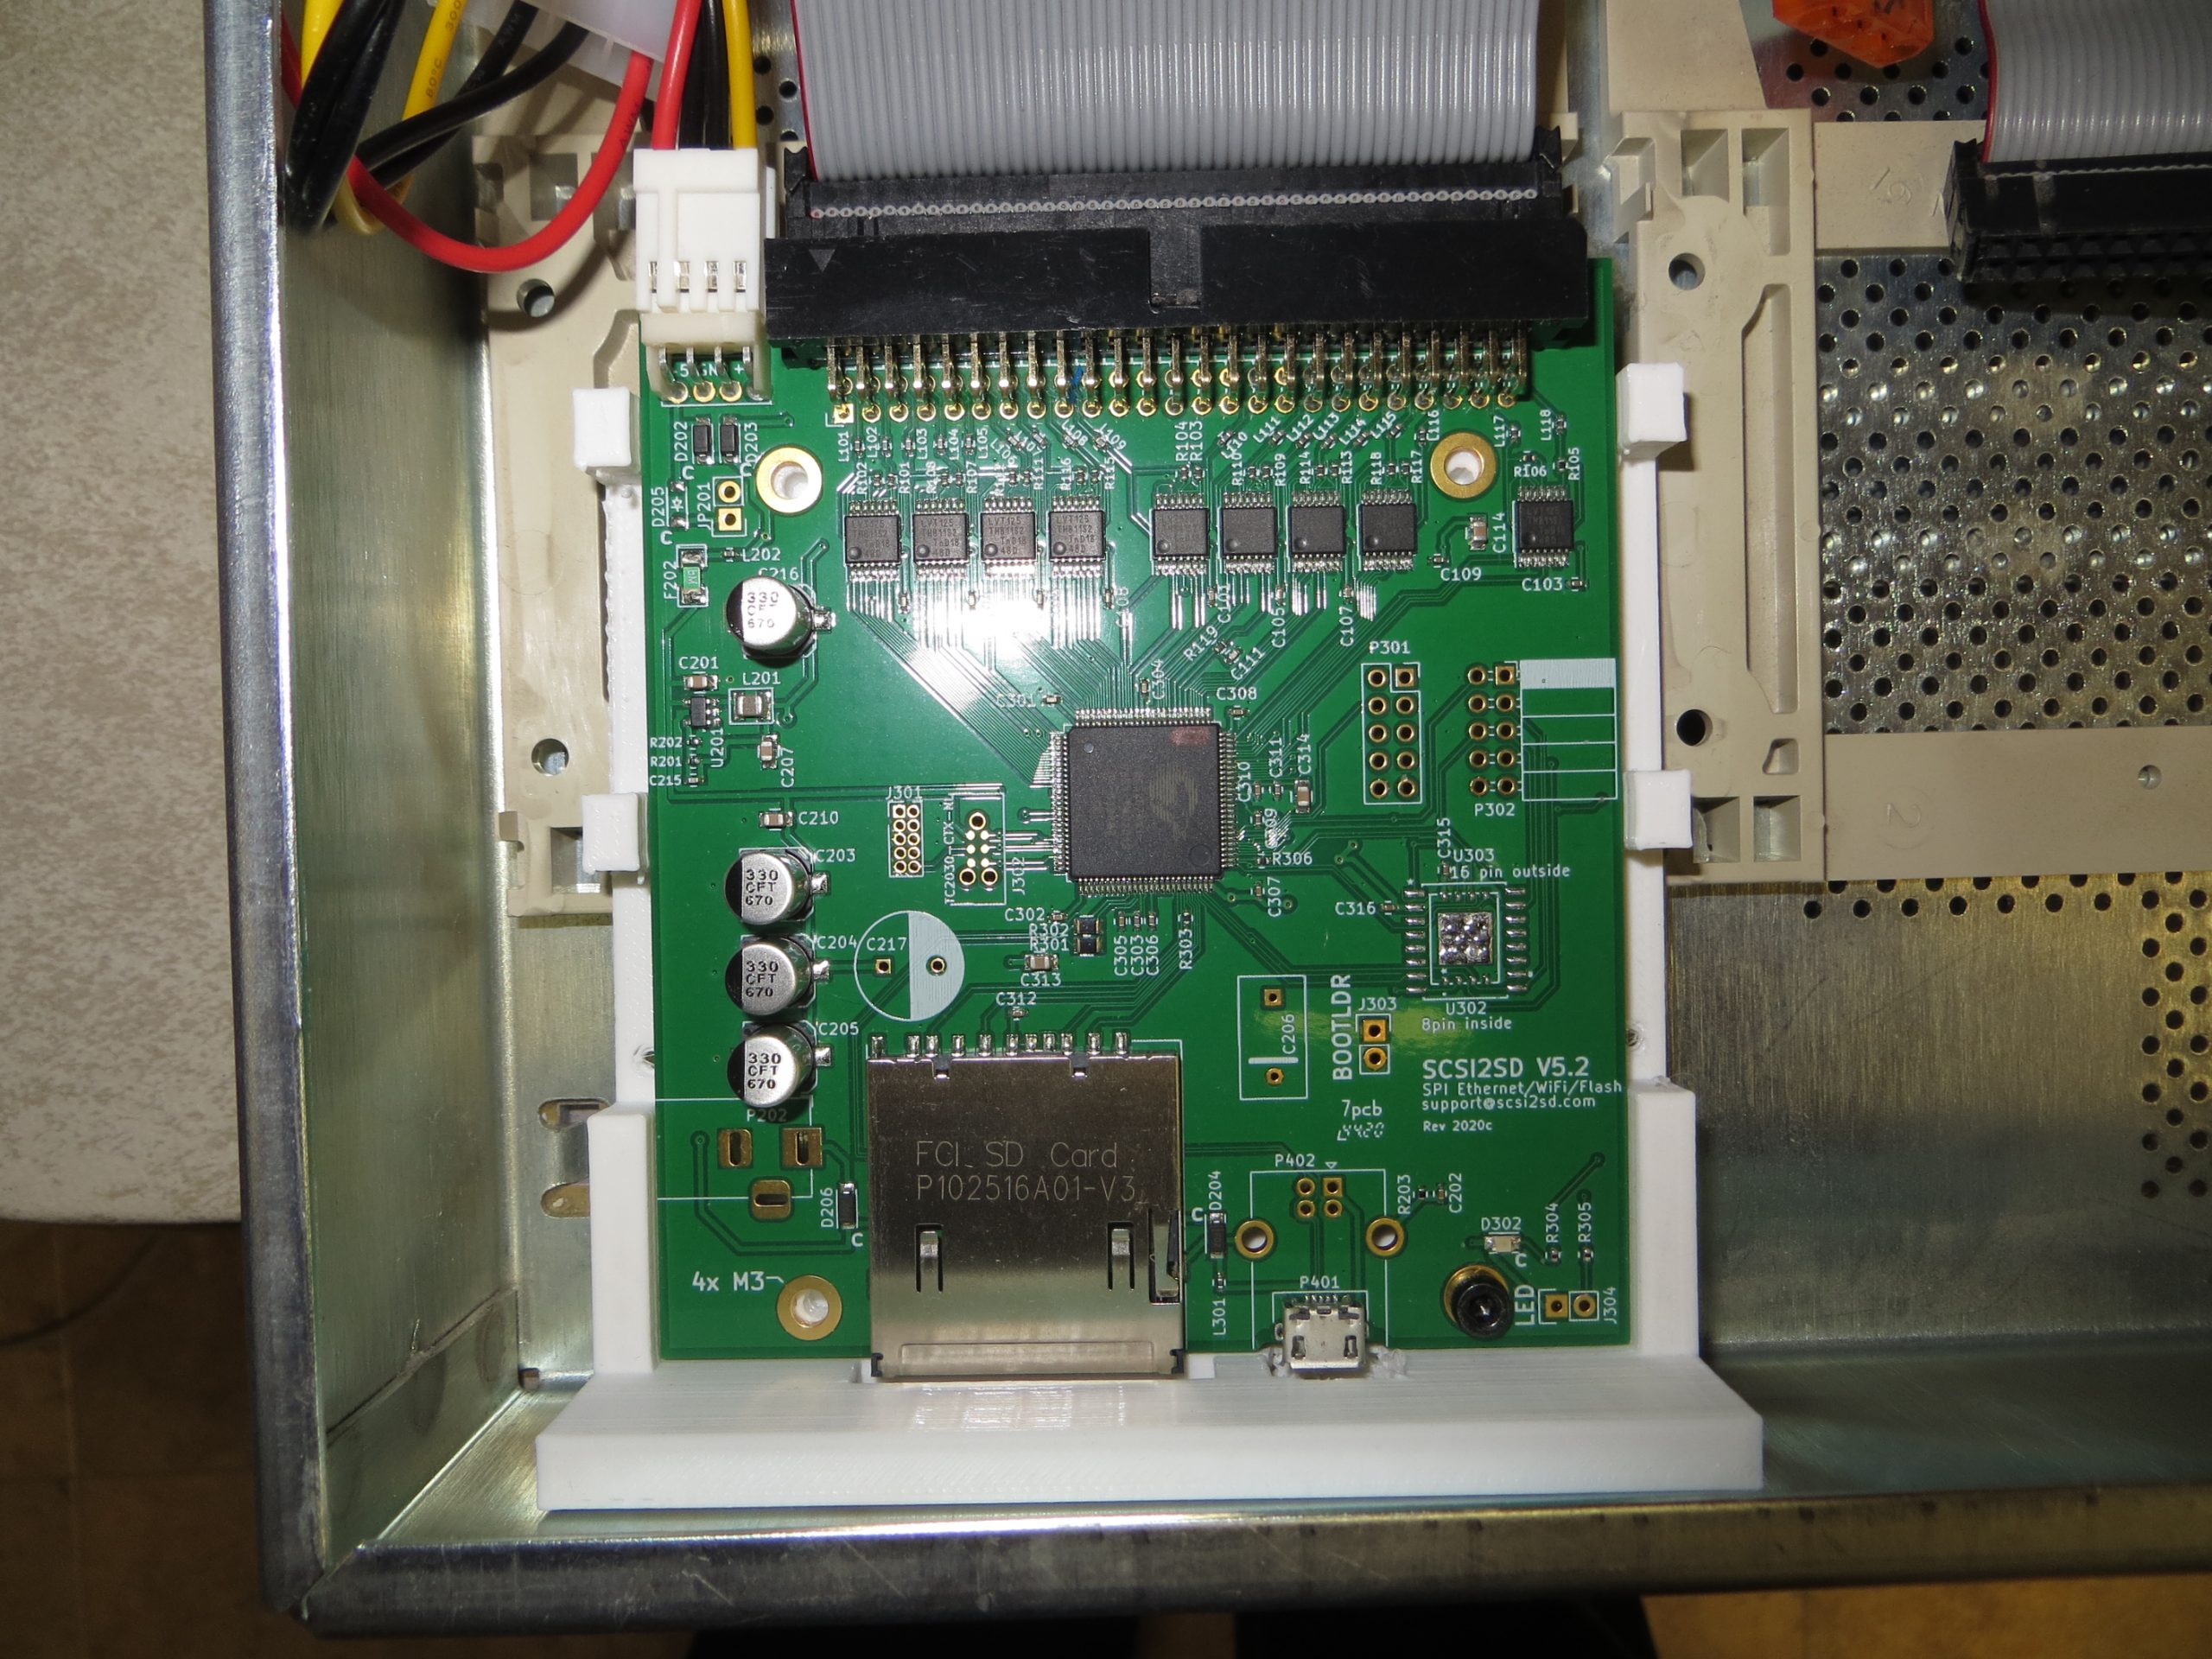 A closeup of the SCSI2SD V5.2 SCSI Disk / CD Emulator